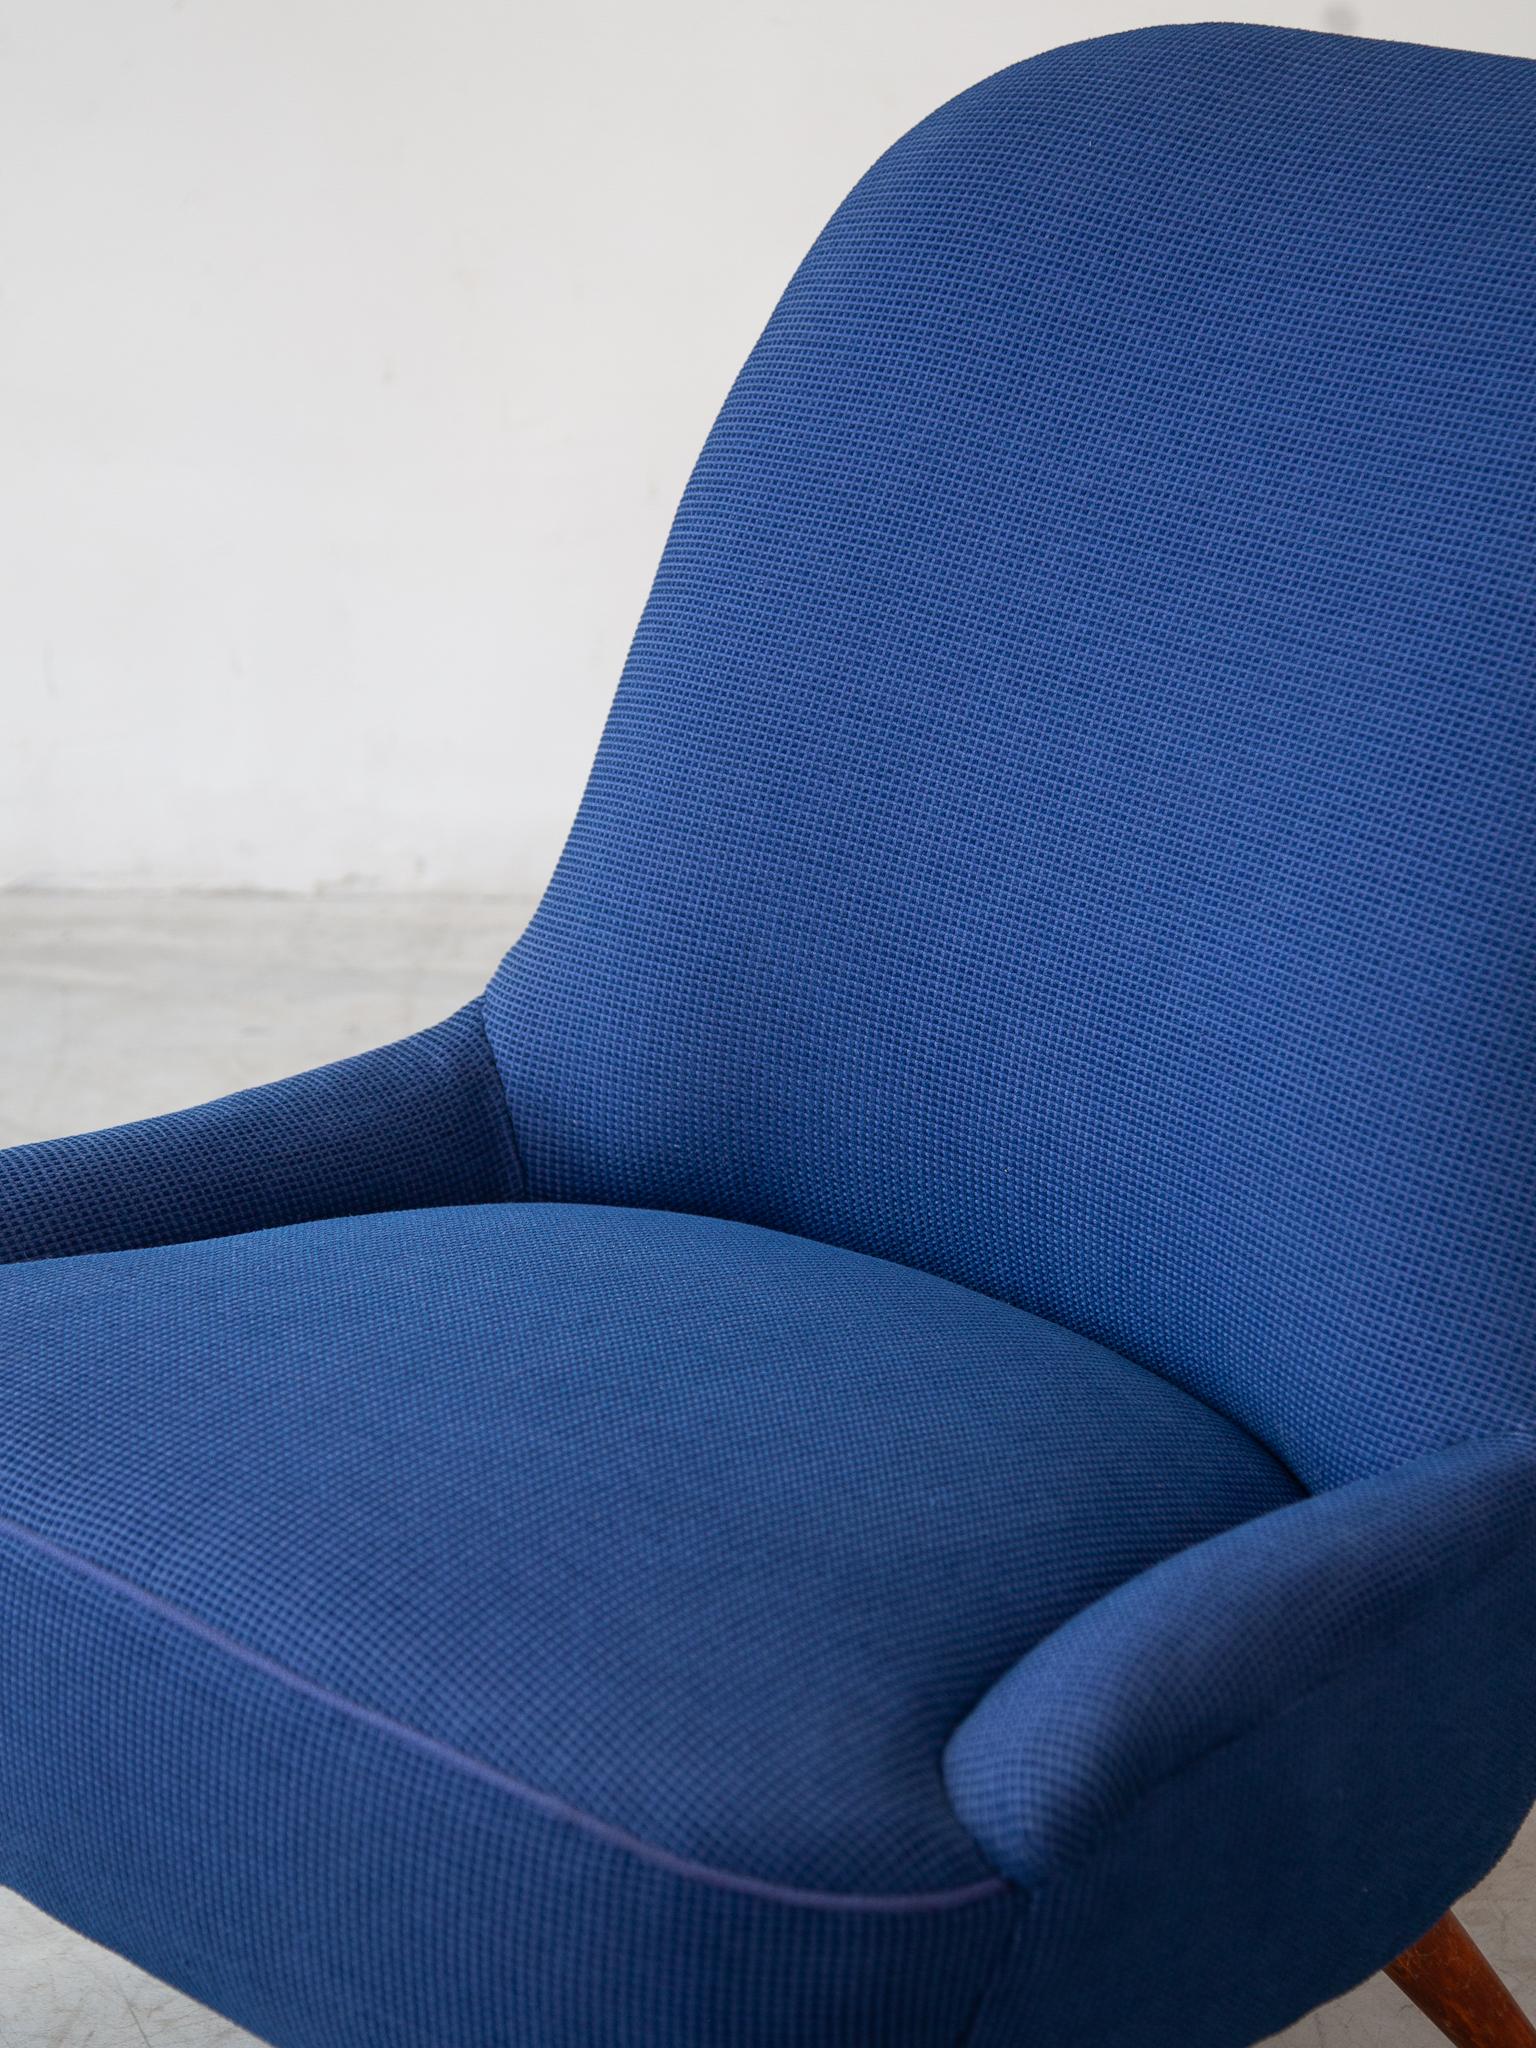 Midcentury Modern 1950s Blue Fabric, Lounge Arm Chair, Scandinavian Design For Sale 1